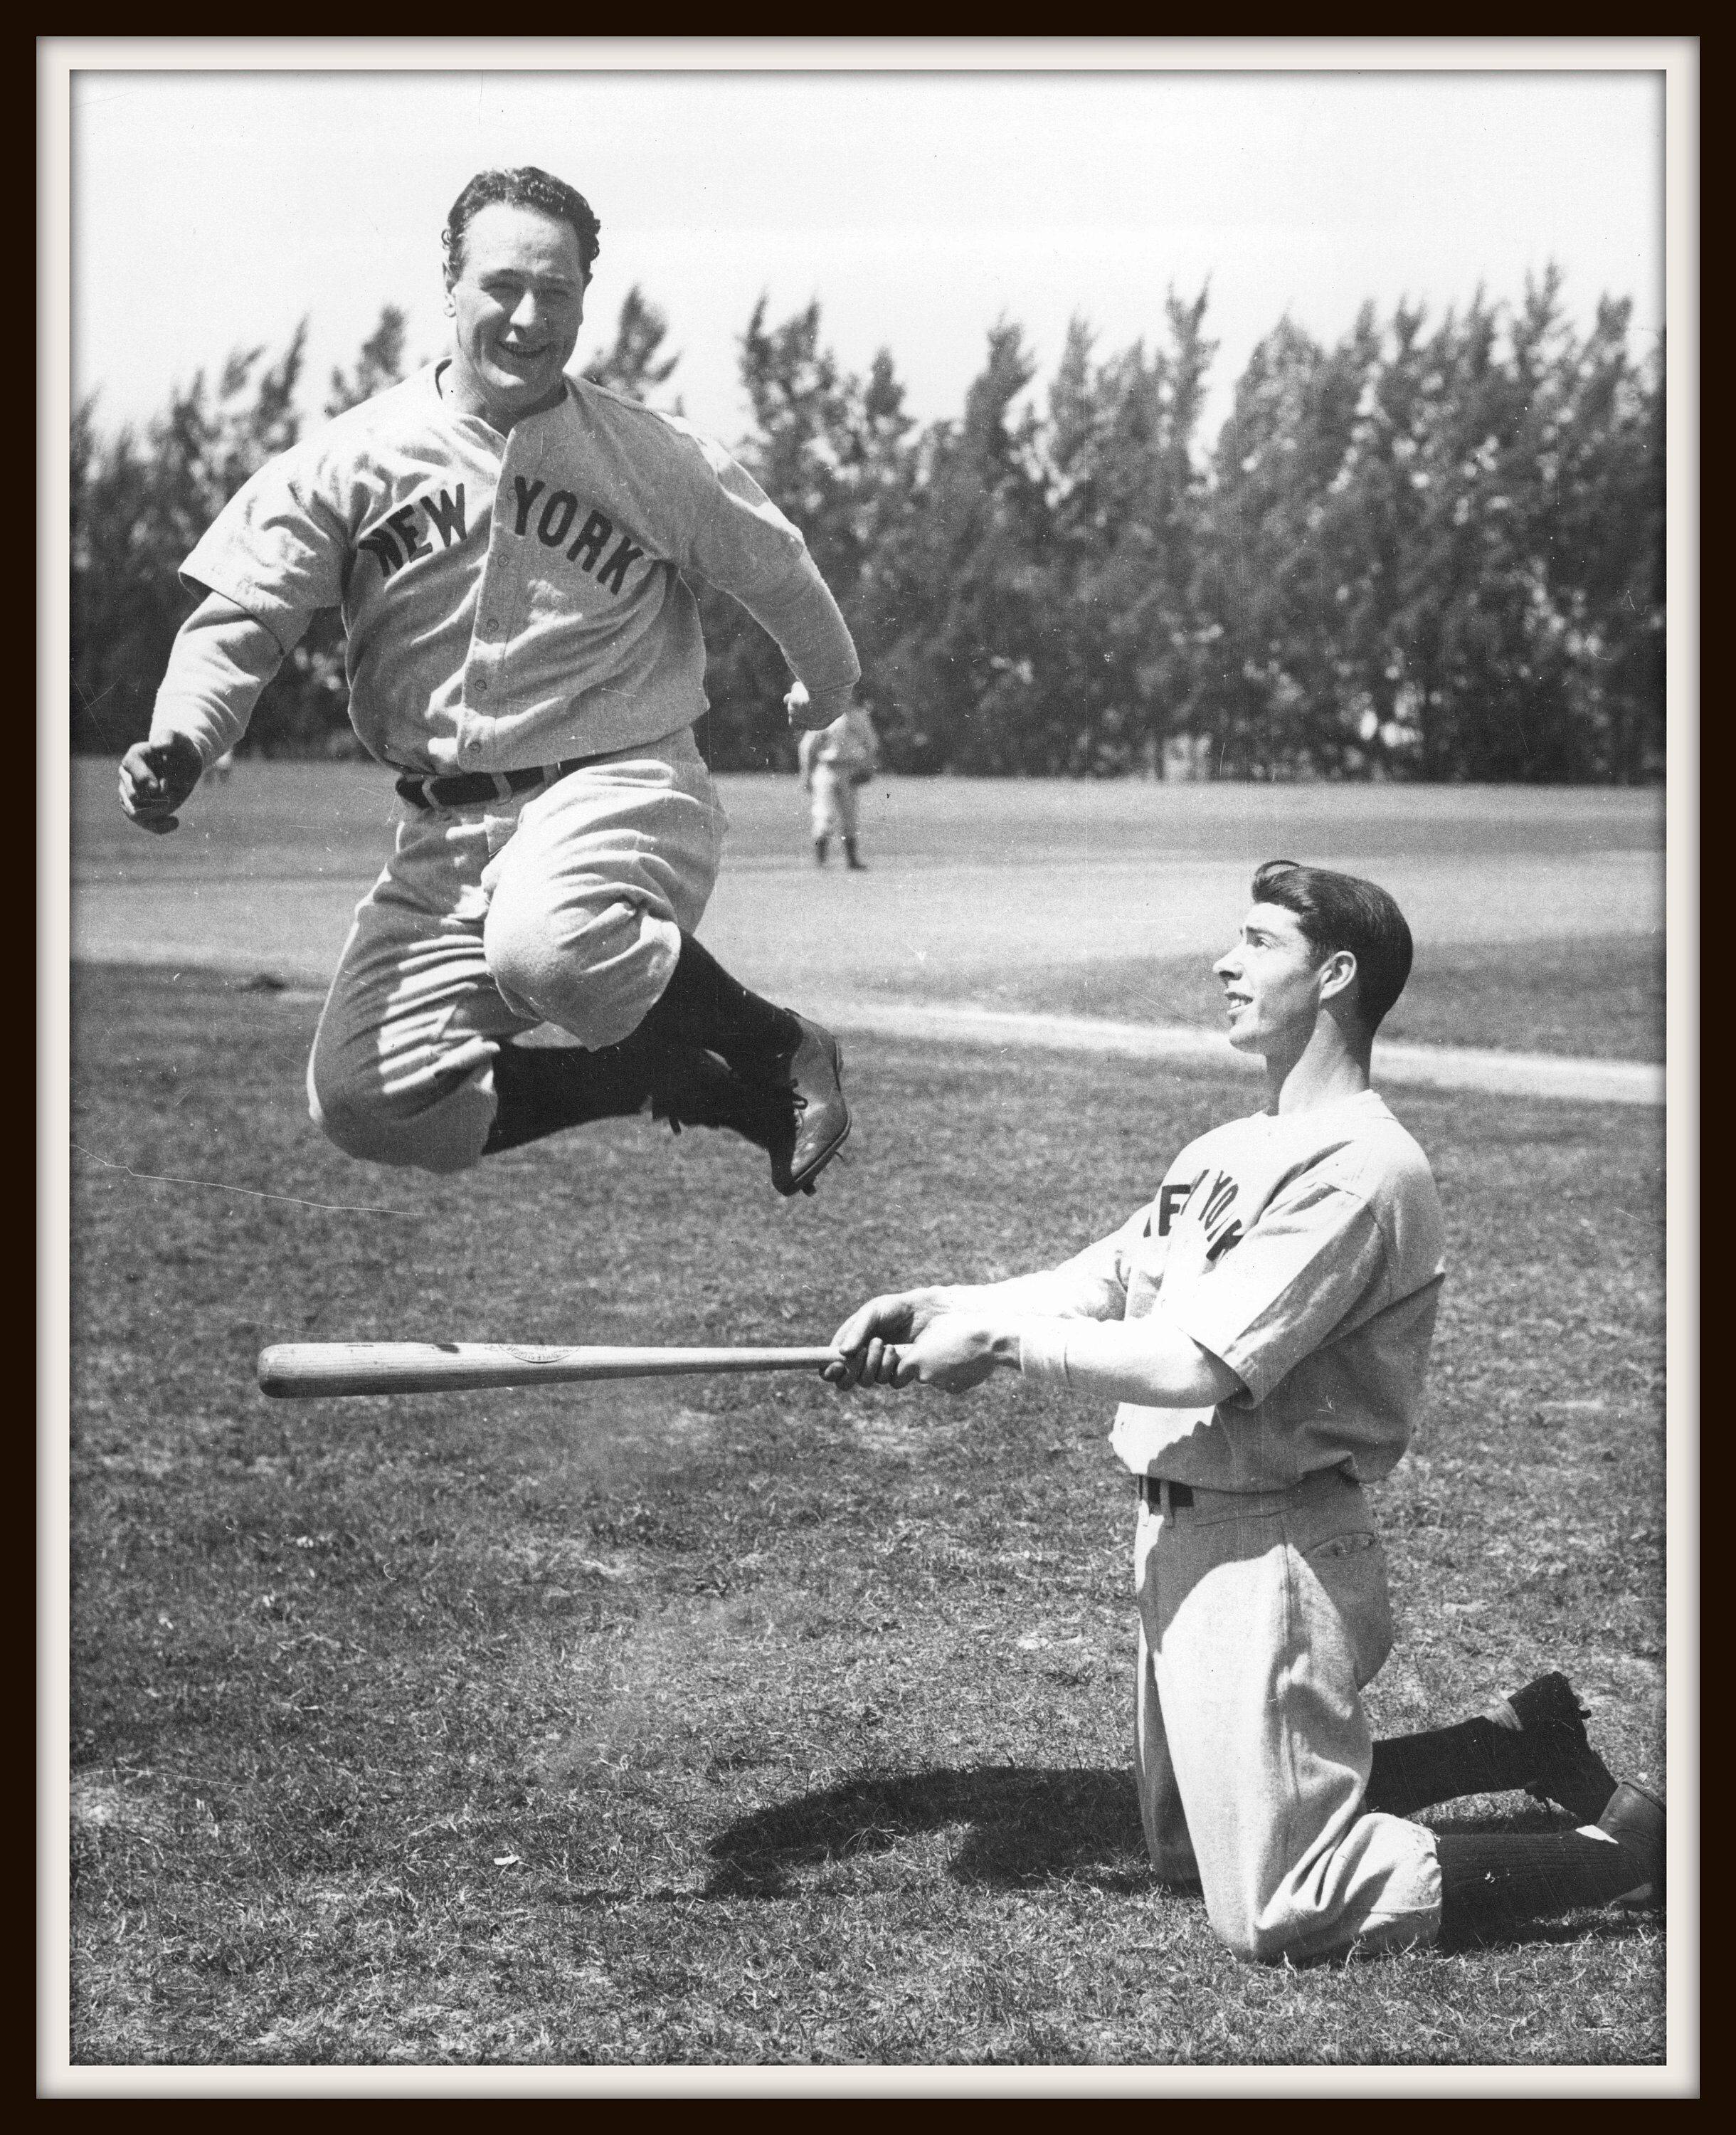 Remembering Lou Gehrig